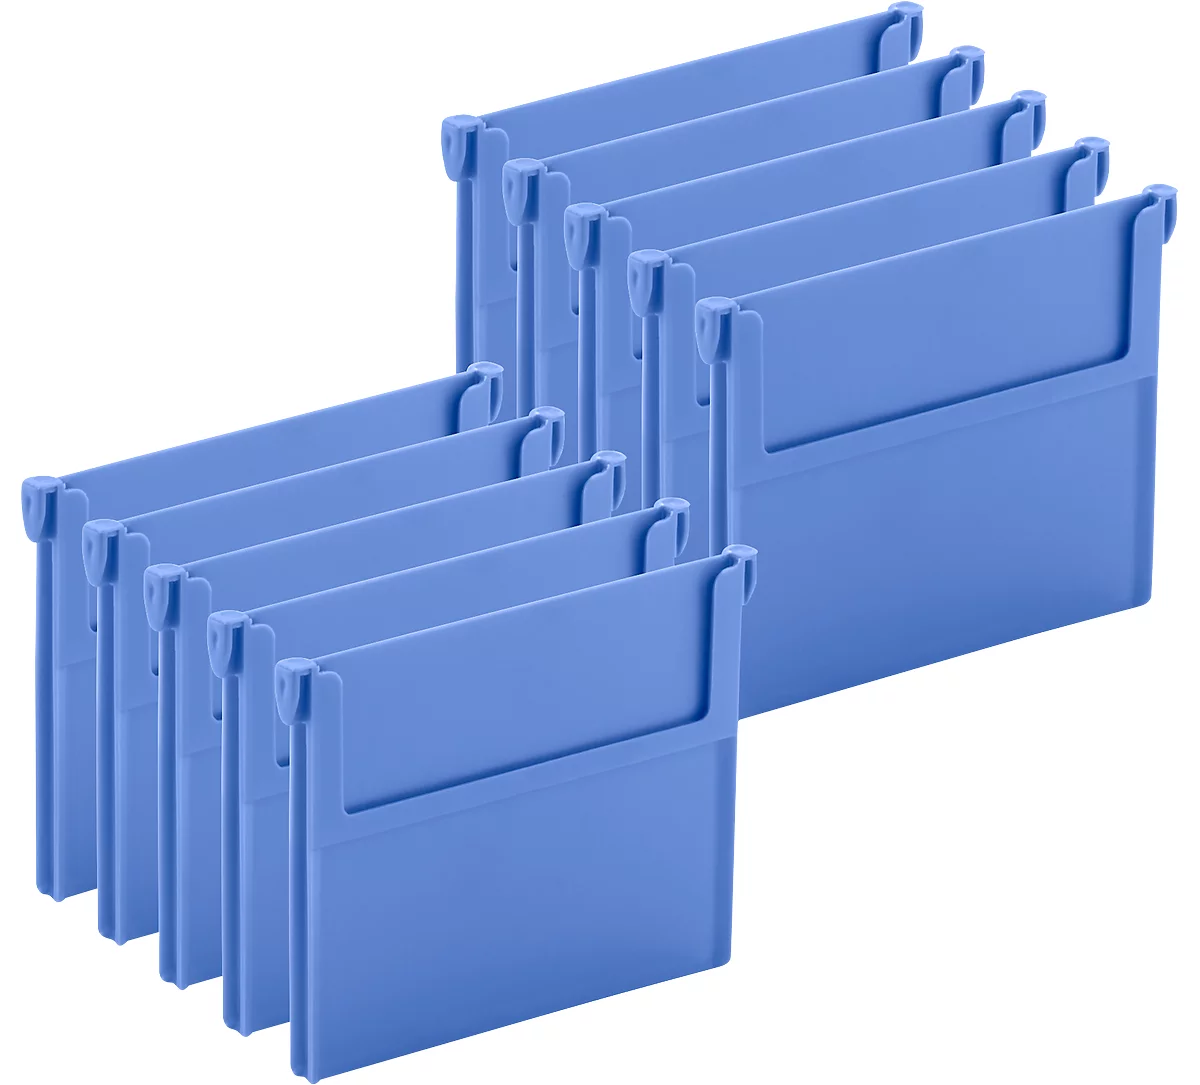 Separador para caja de estantes RK 521/421/621, azul, 10 unidades.